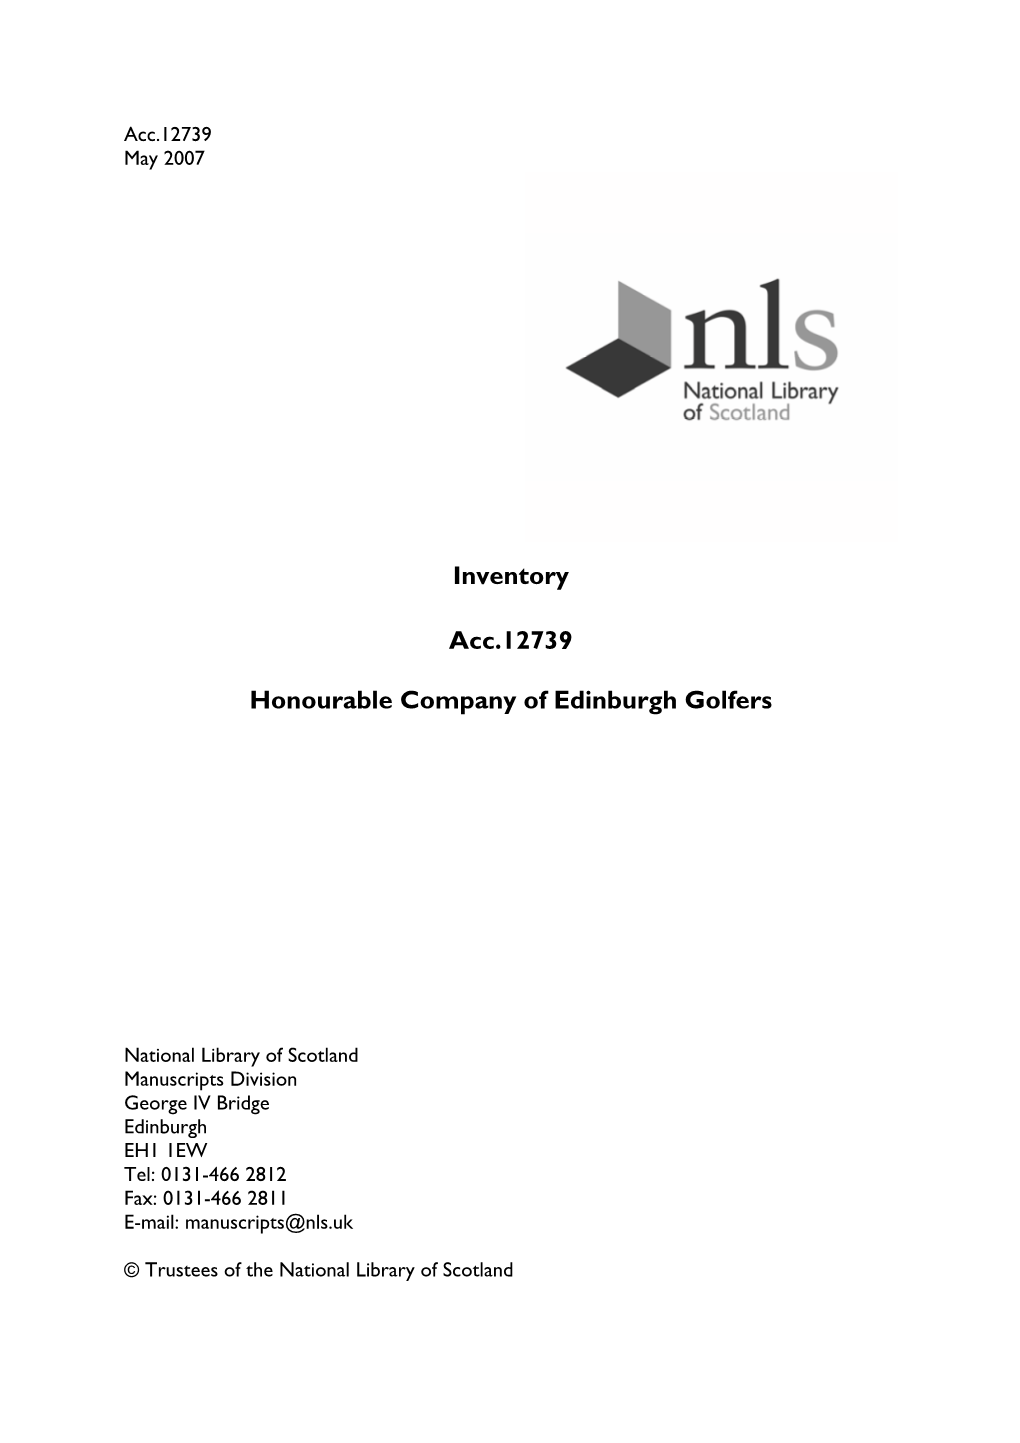 Inventory Acc.12739 Honourable Company of Edinburgh Golfers